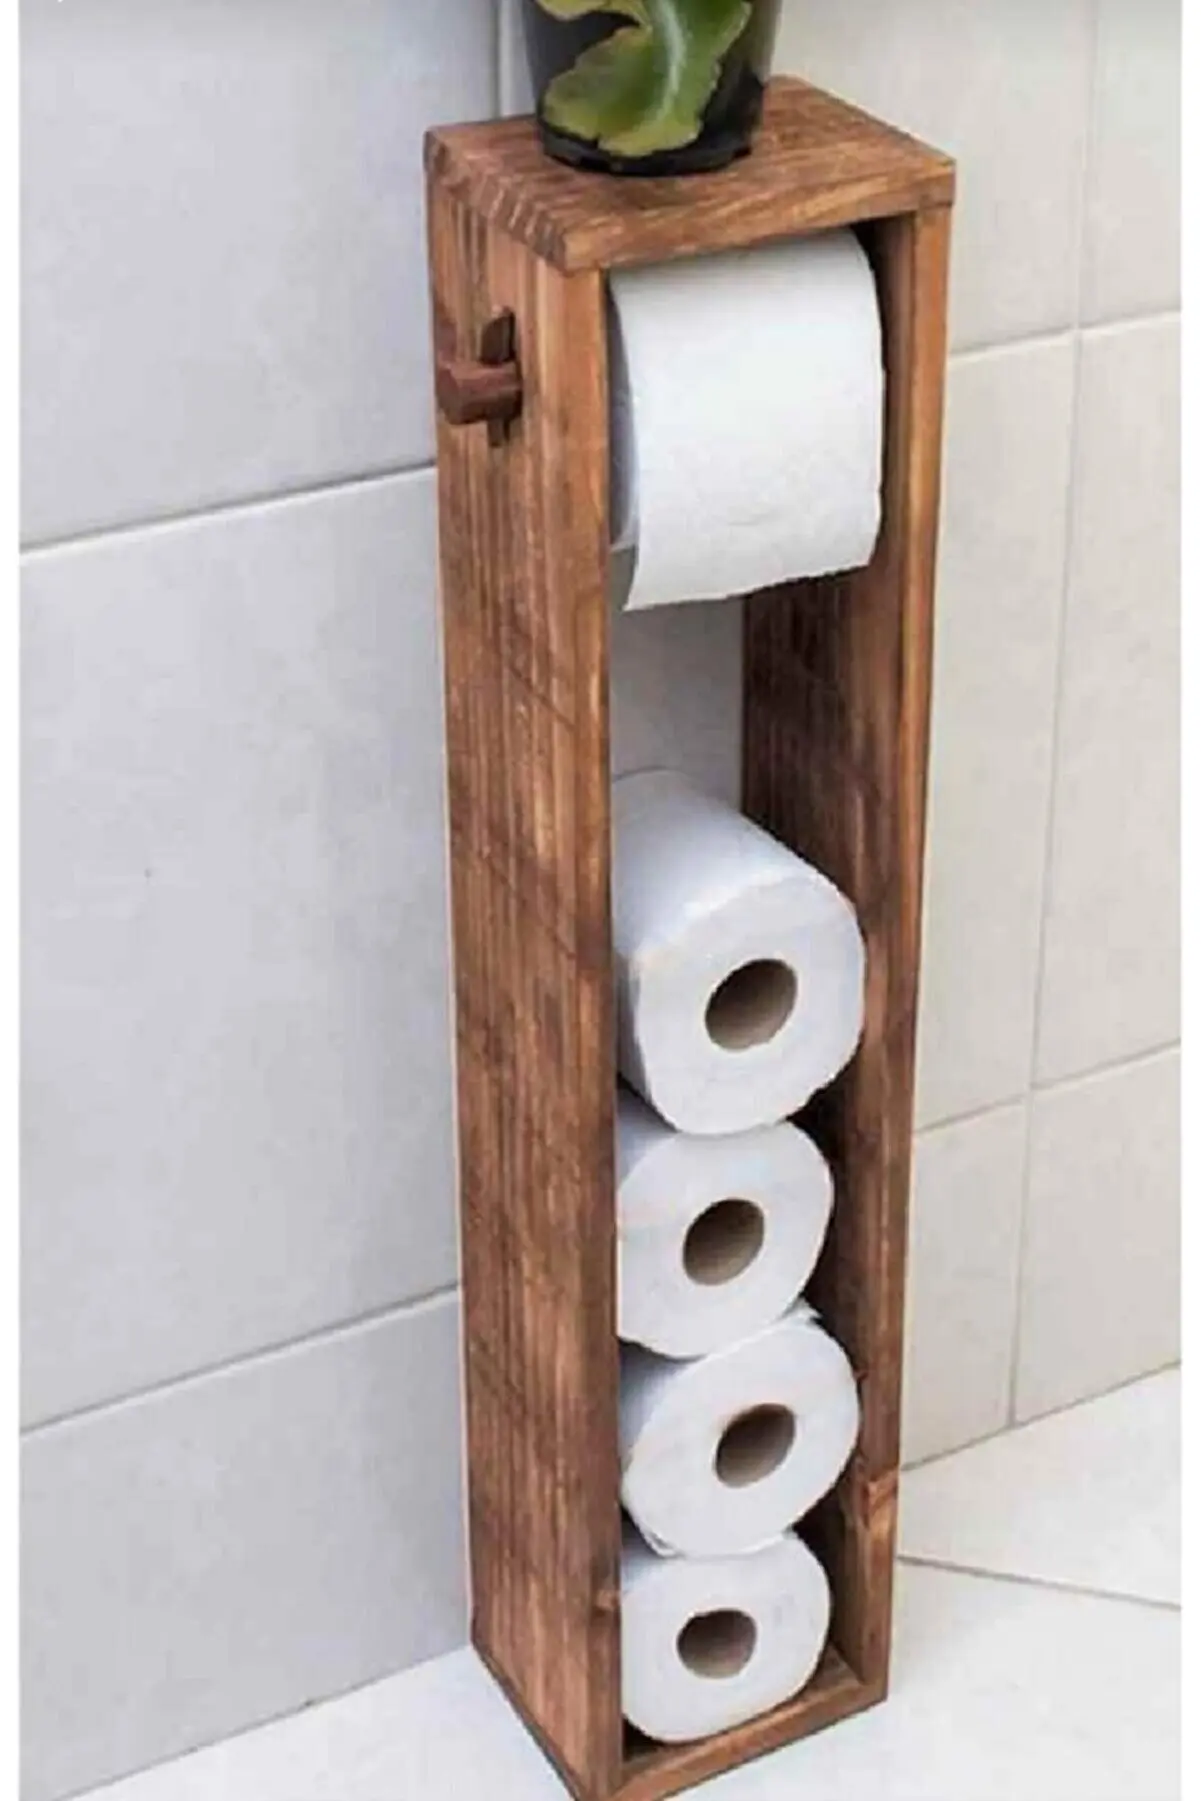 Wooden Toilet Paper Stand Wooden Toilet Roll Holder Bathroom Shelf Bathroom Shelves Wooden bathroom cabinet toilet paper rack